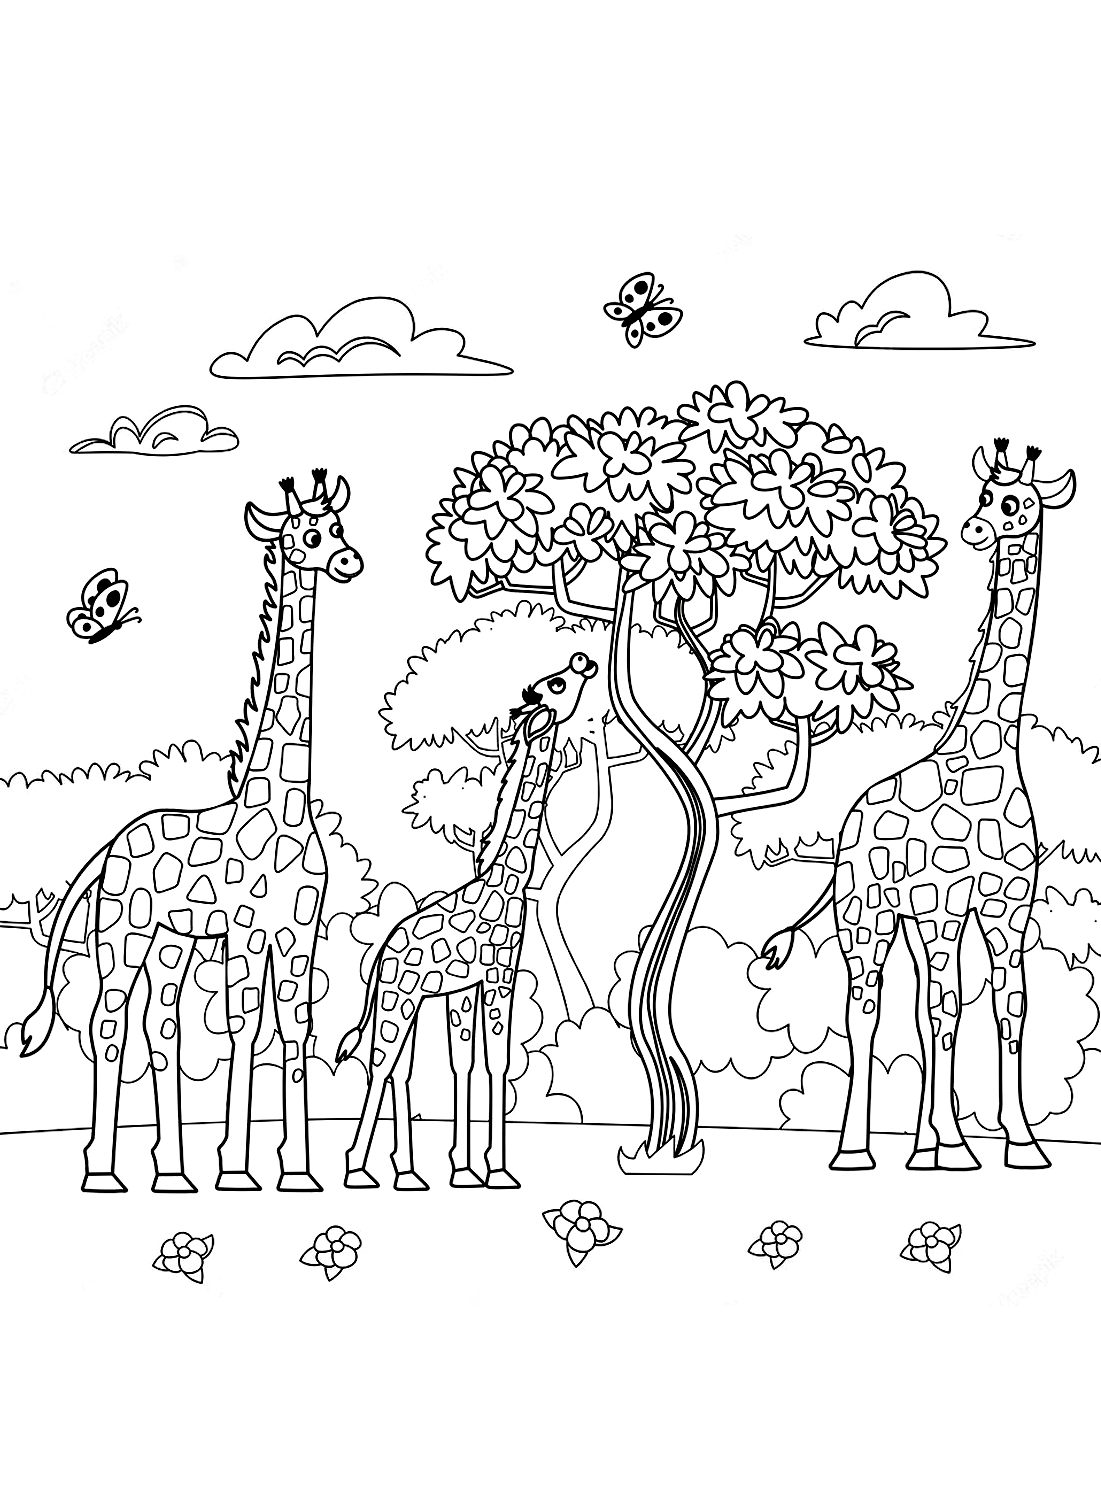 Giraffes in the forest sheet